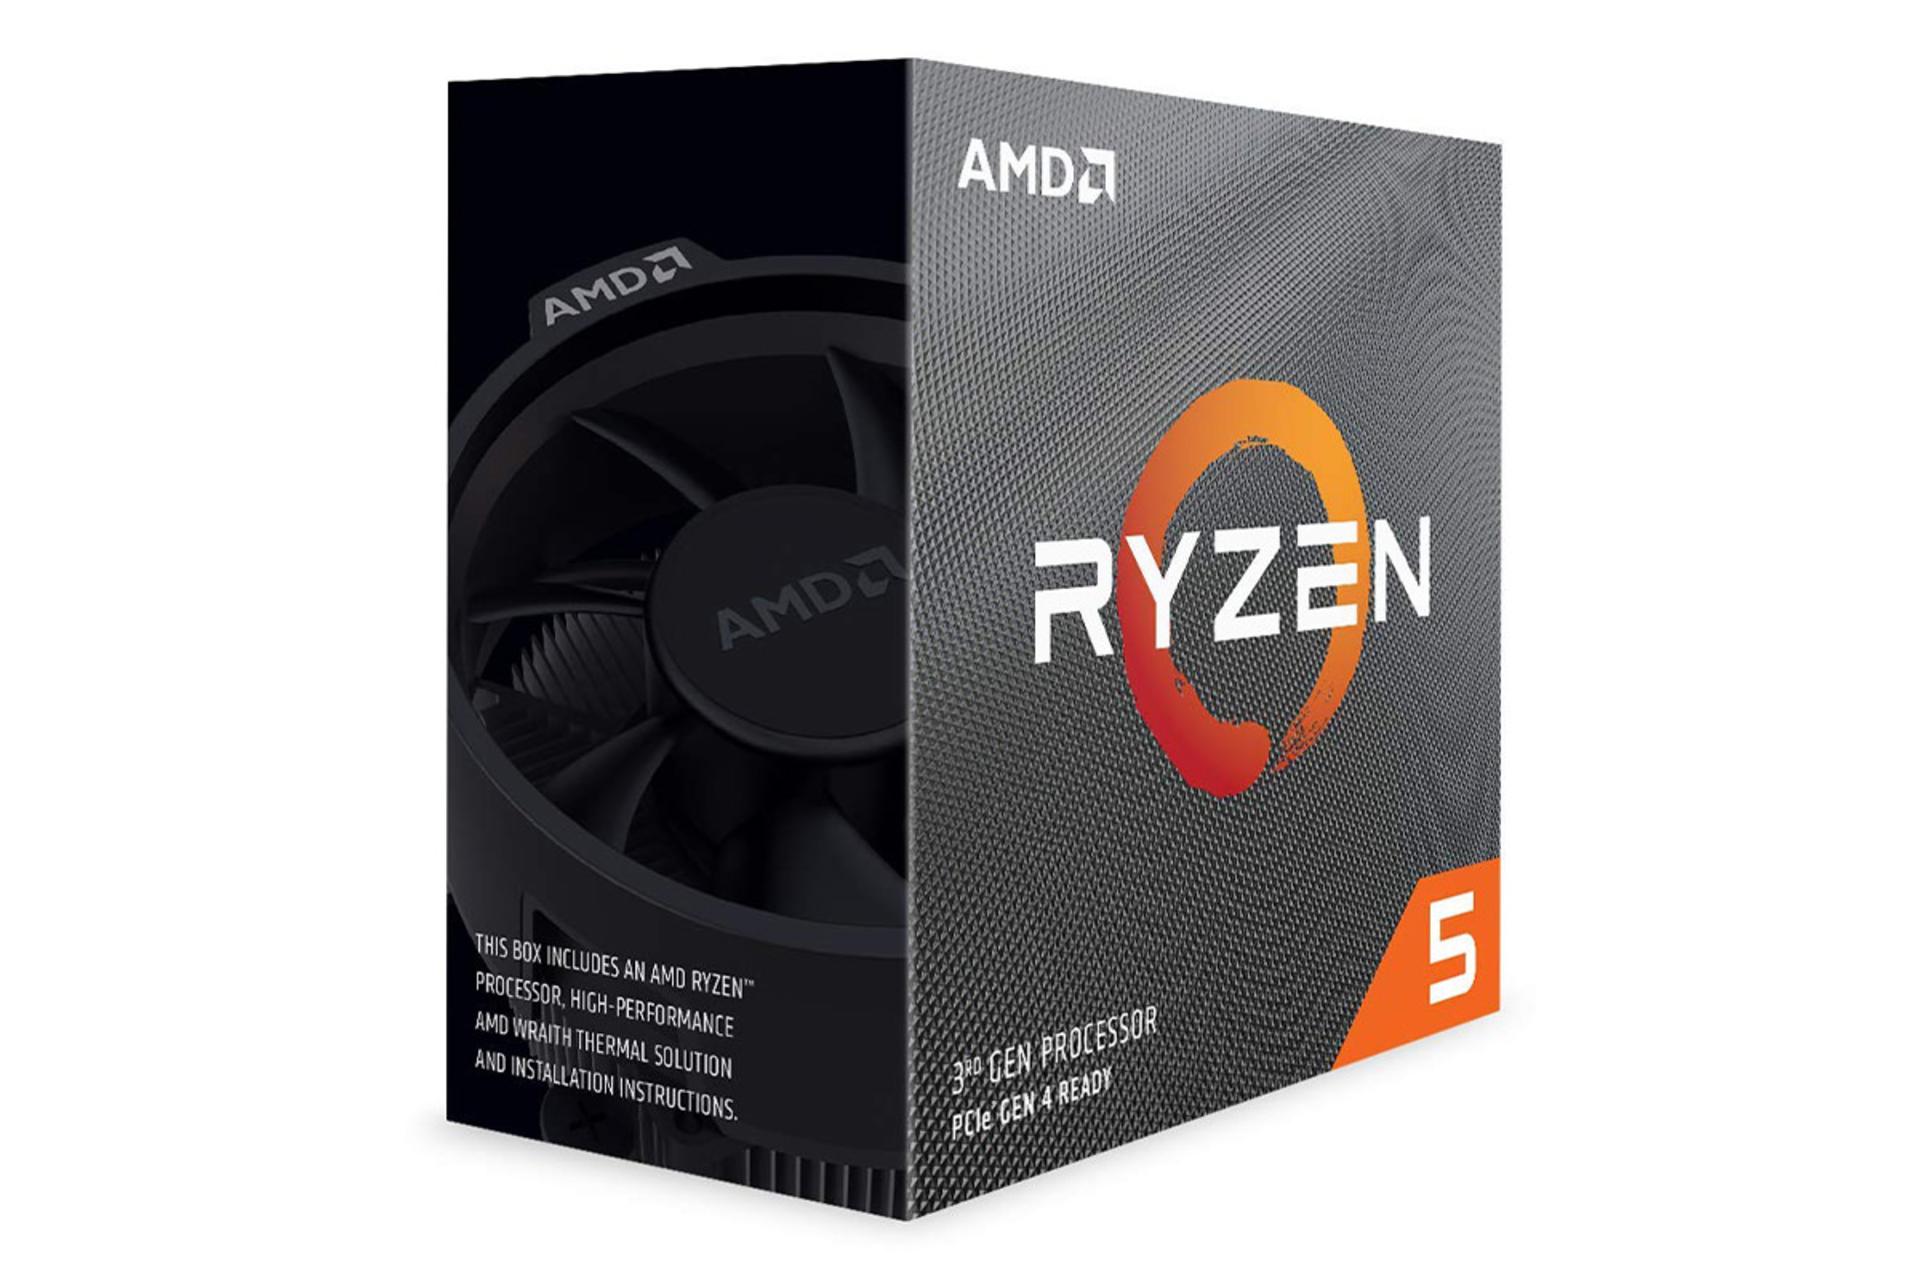 AMD رایزن 5 3600 / AMD Ryzen 5 3600